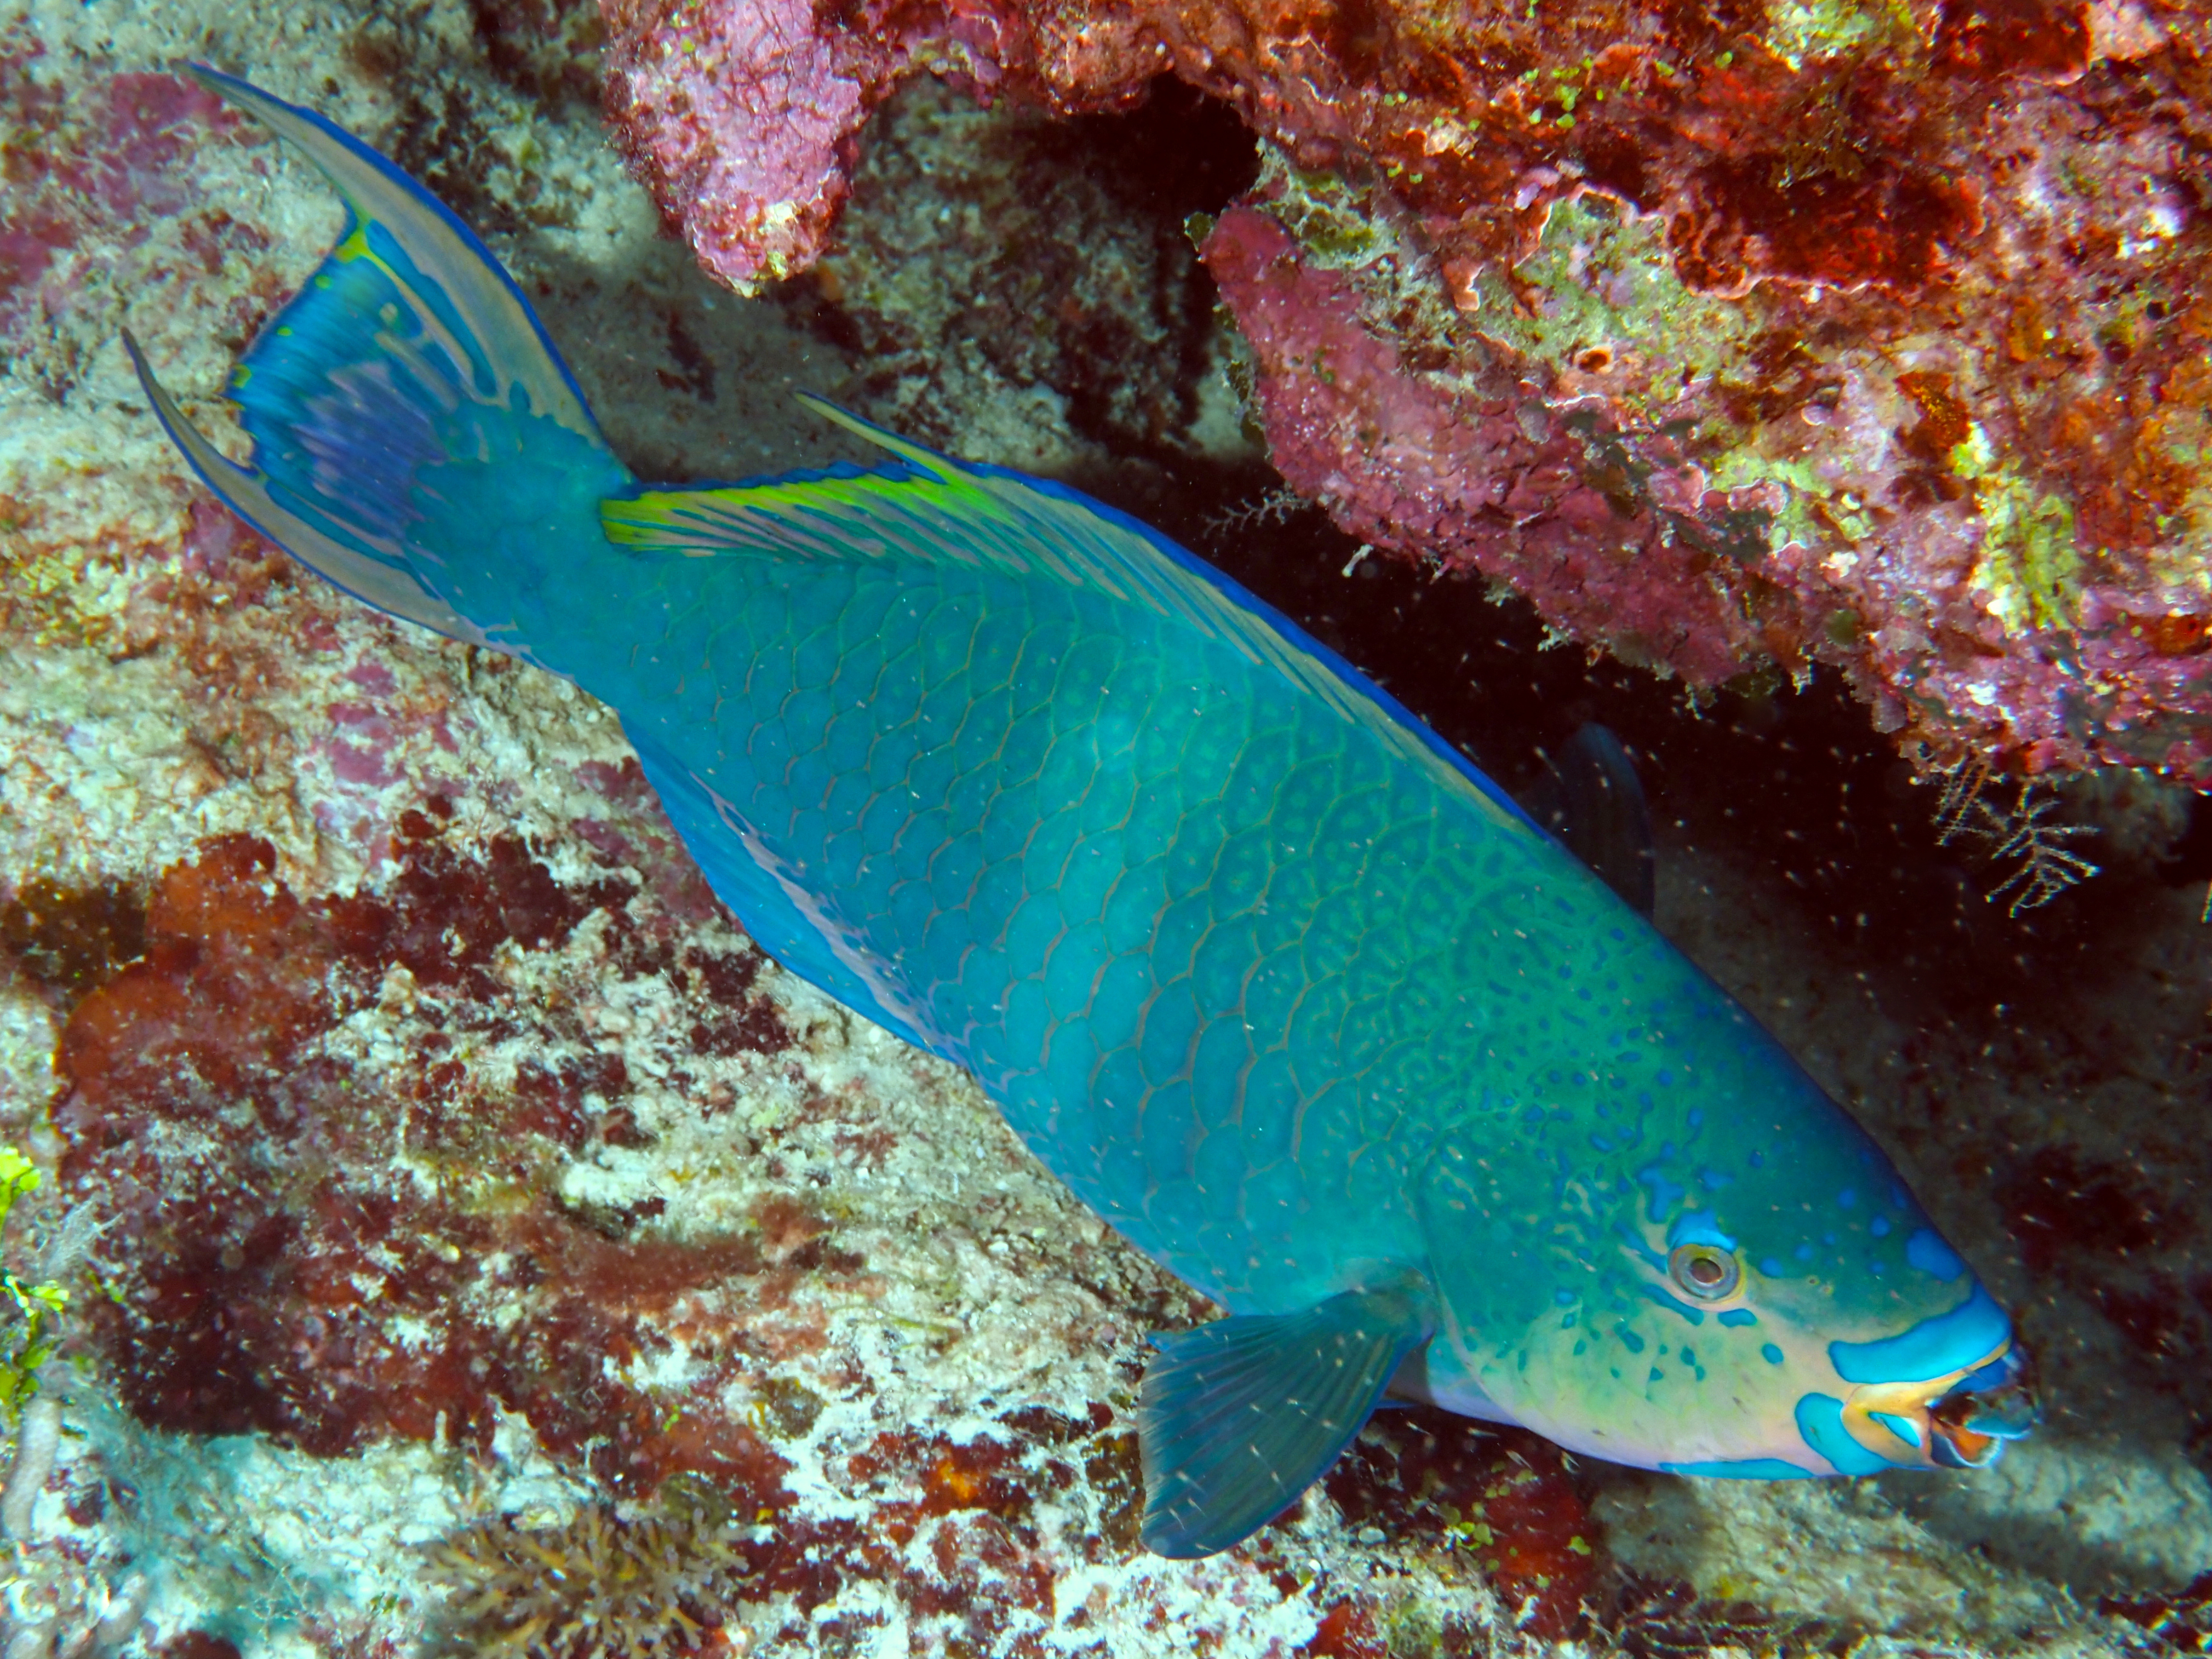 Filament-Fin Parrotfish - Scarus altipinnis